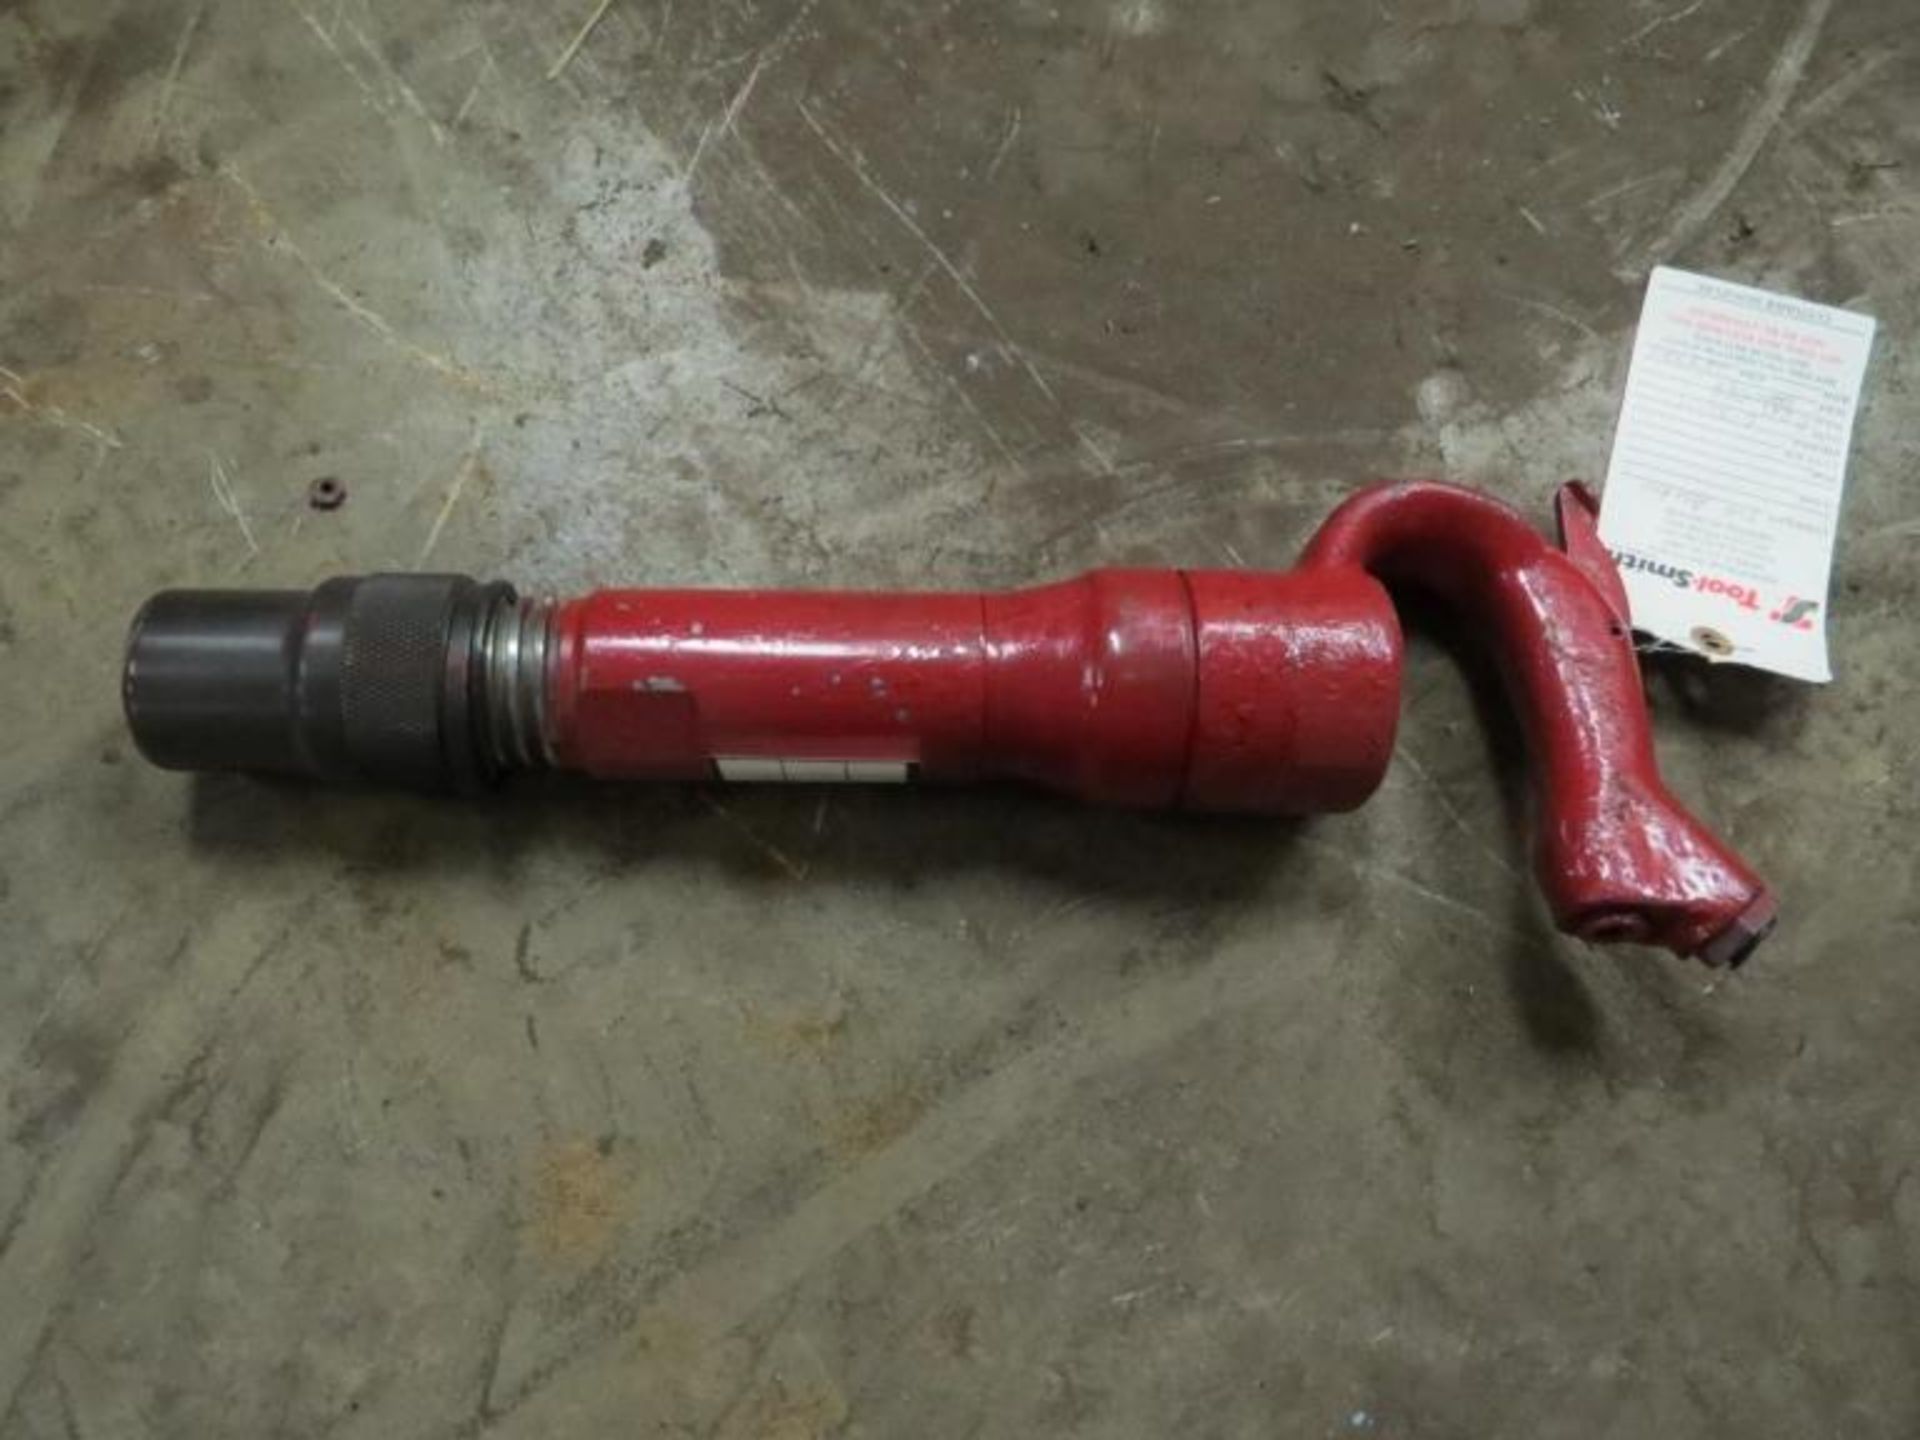 Ingersoll-Rand Pneumatic Chipping Hammer-